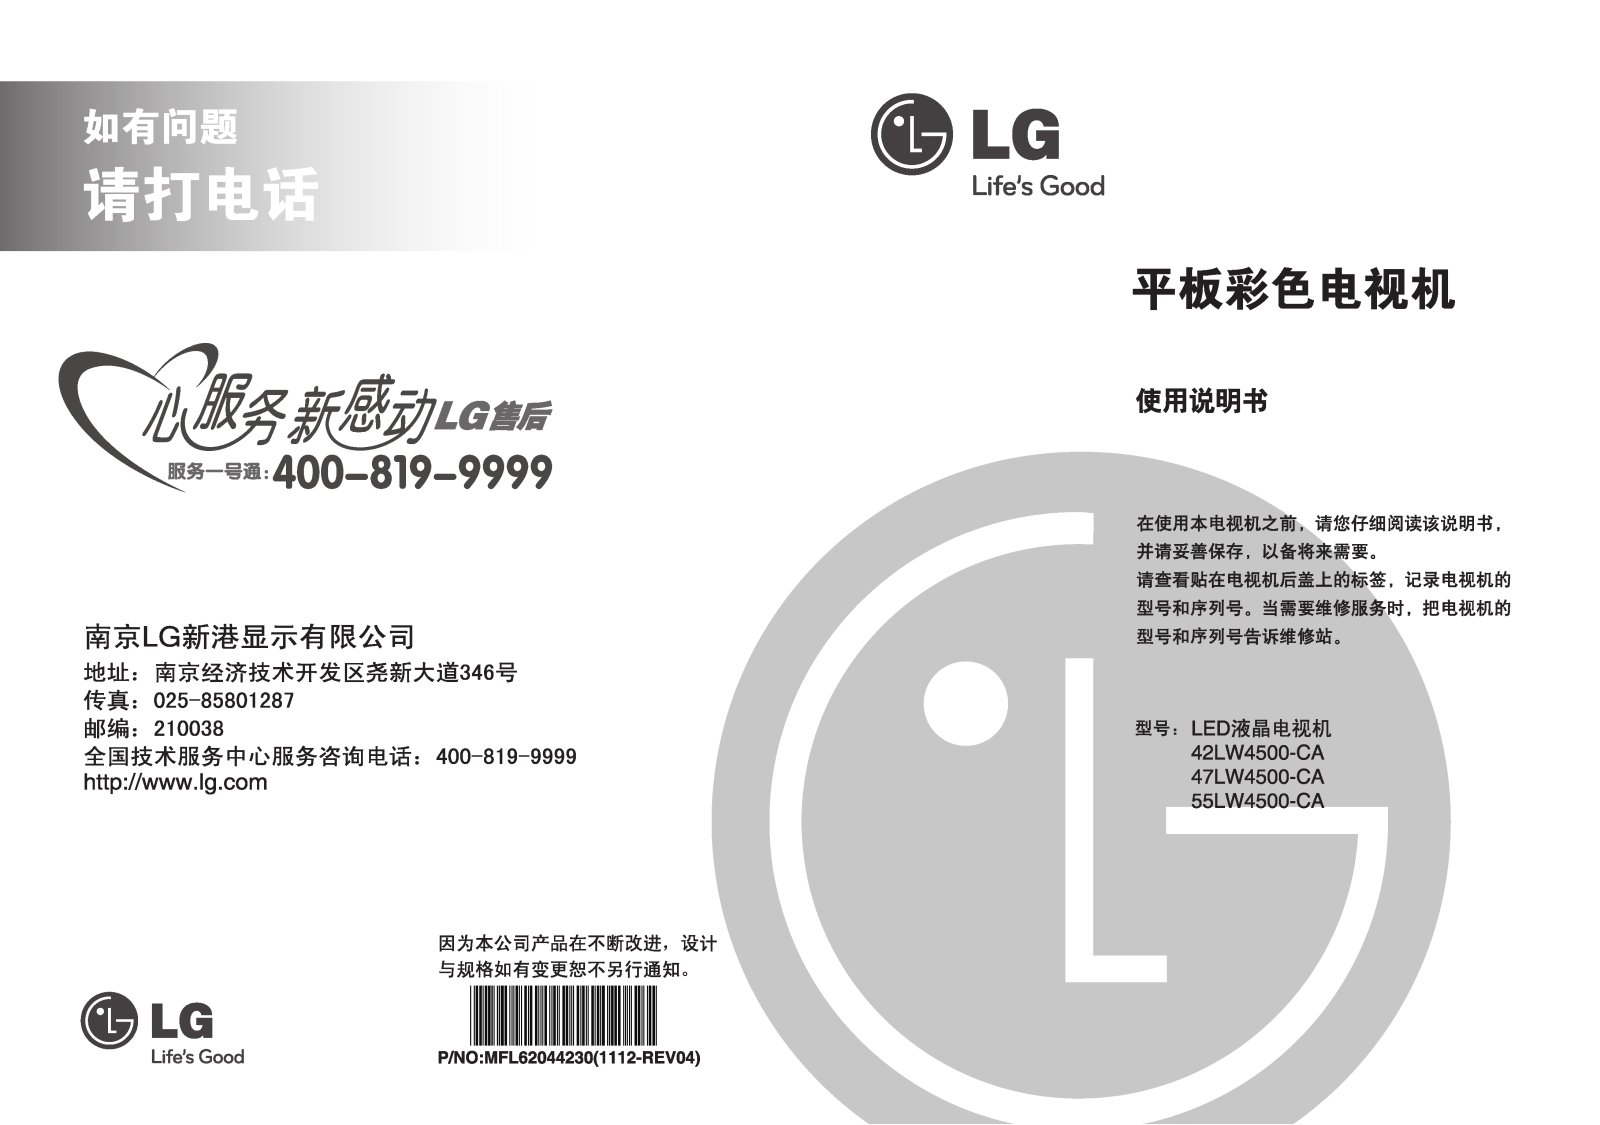 LG 55LW4500-CA Users guide